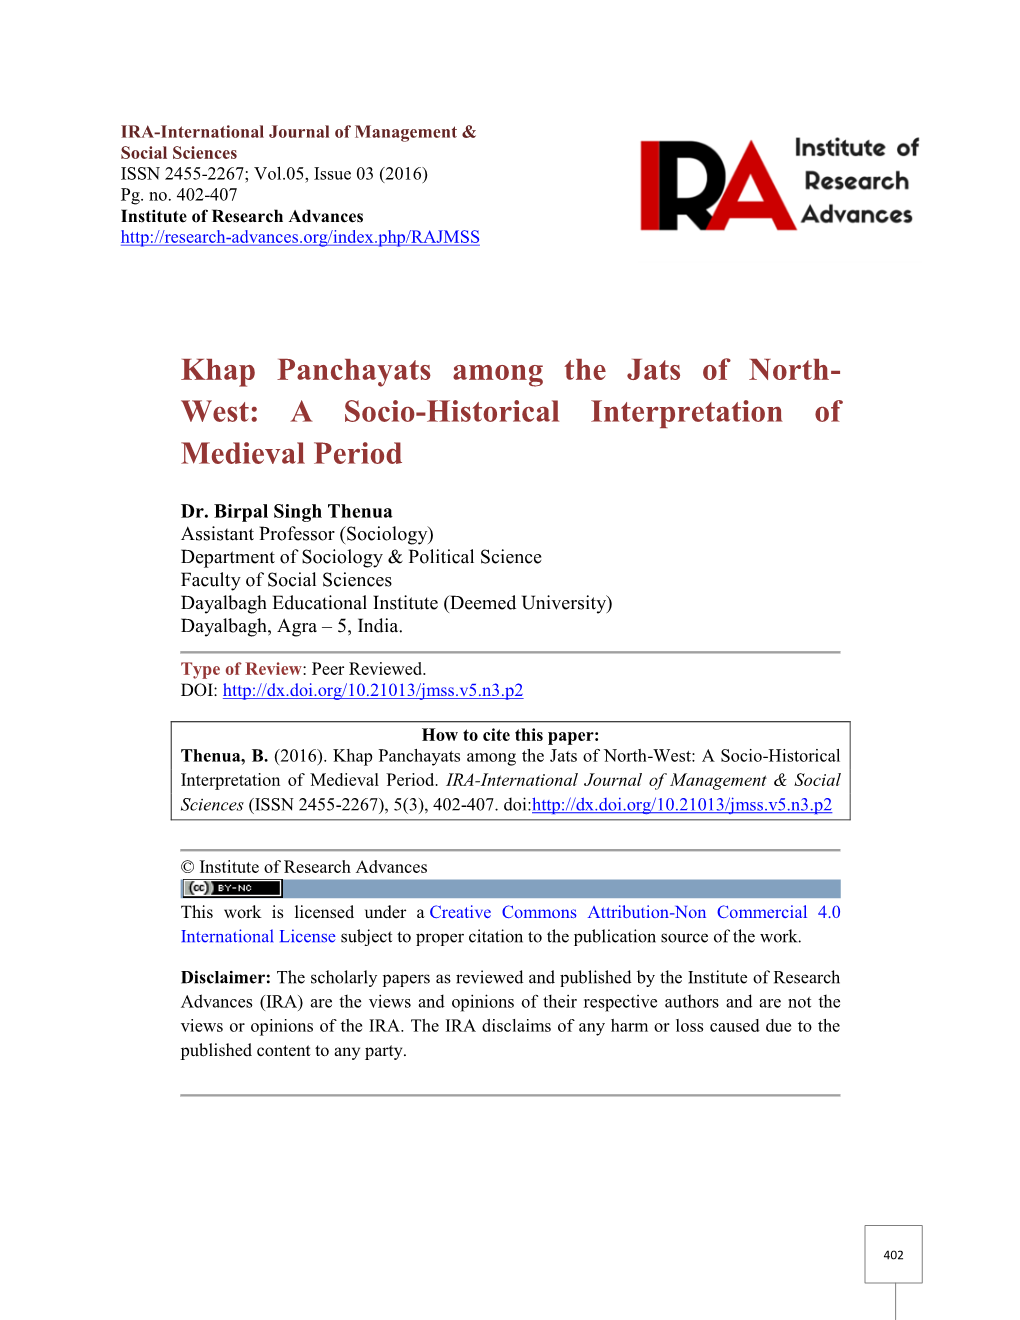 Khap Panchayats Among the Jats of North- West: a Socio-Historical Interpretation of Medieval Period